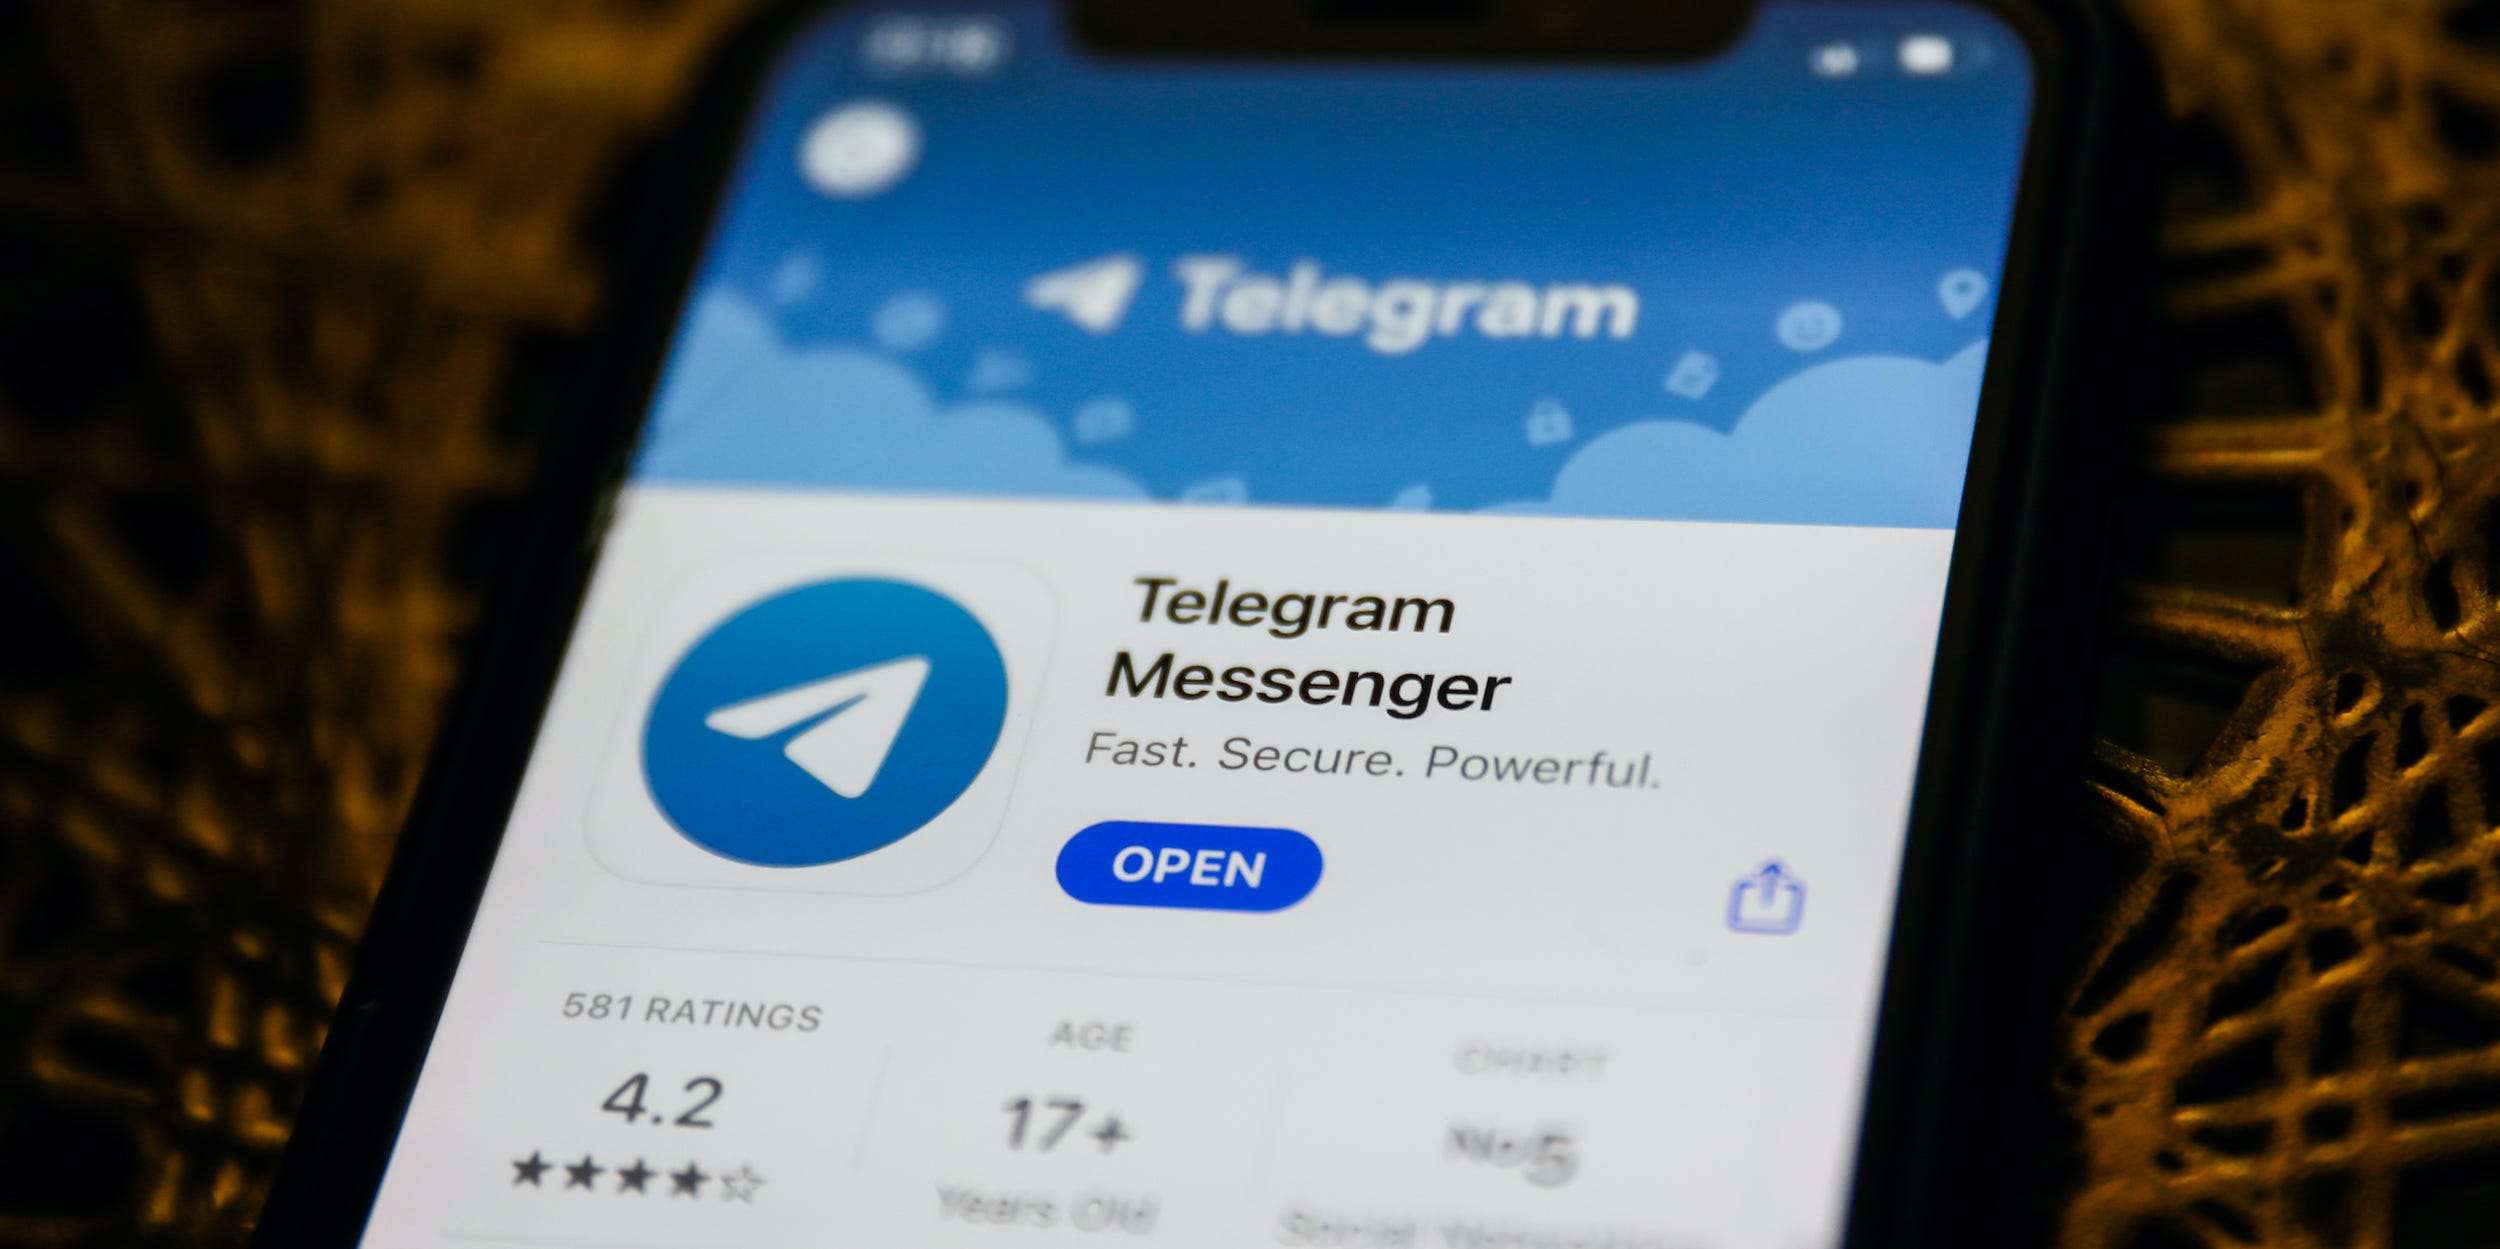 the telegram